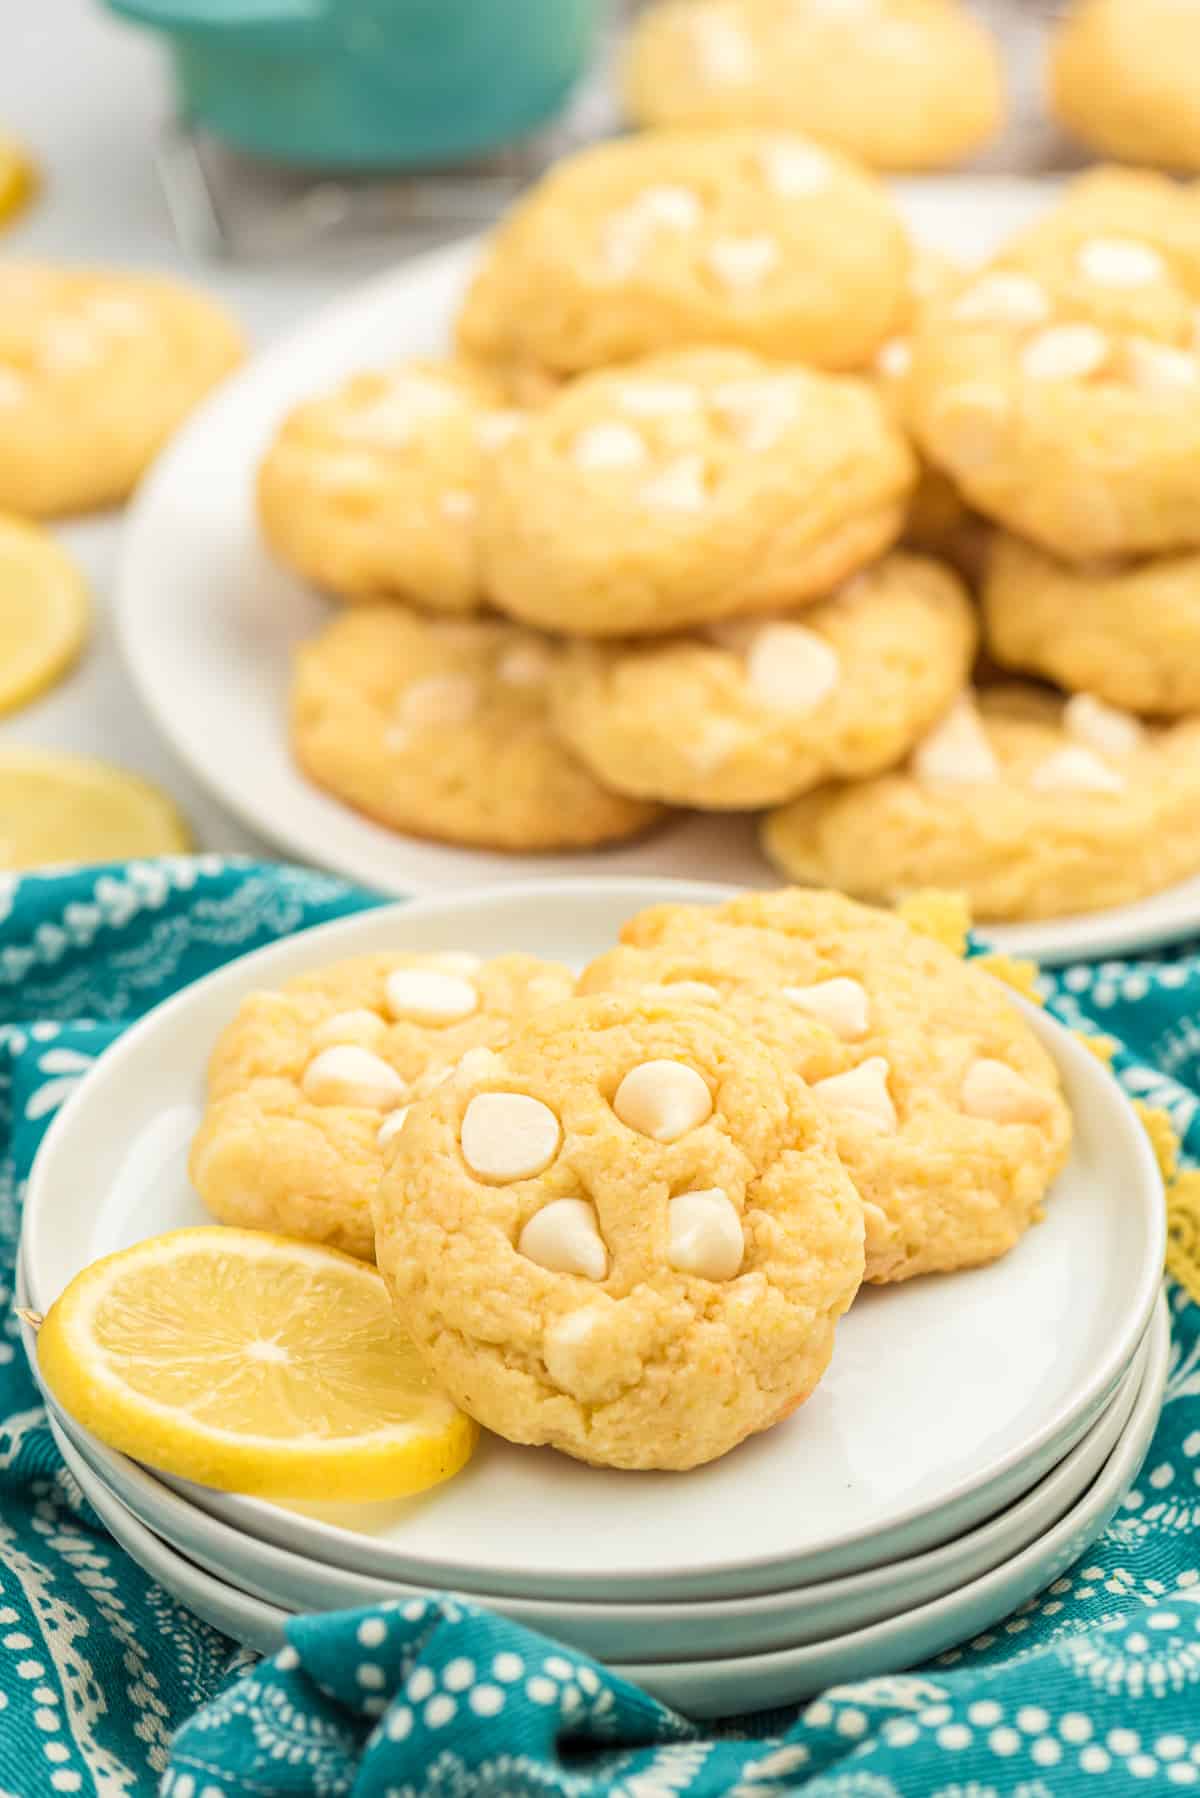 Lemon cookies on plate with lemon slice.